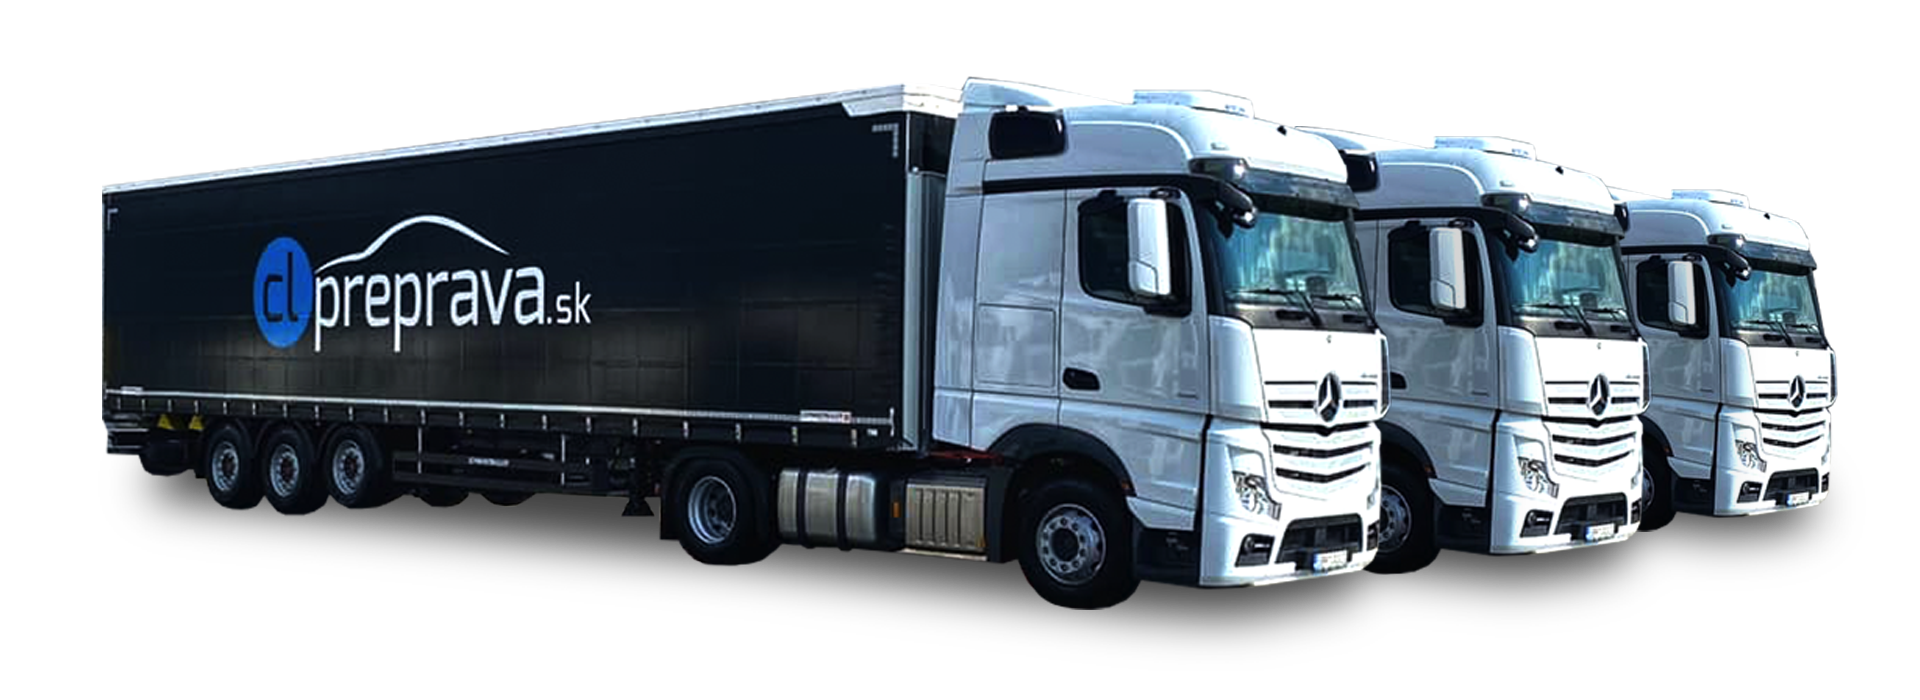 Freight truck transportation